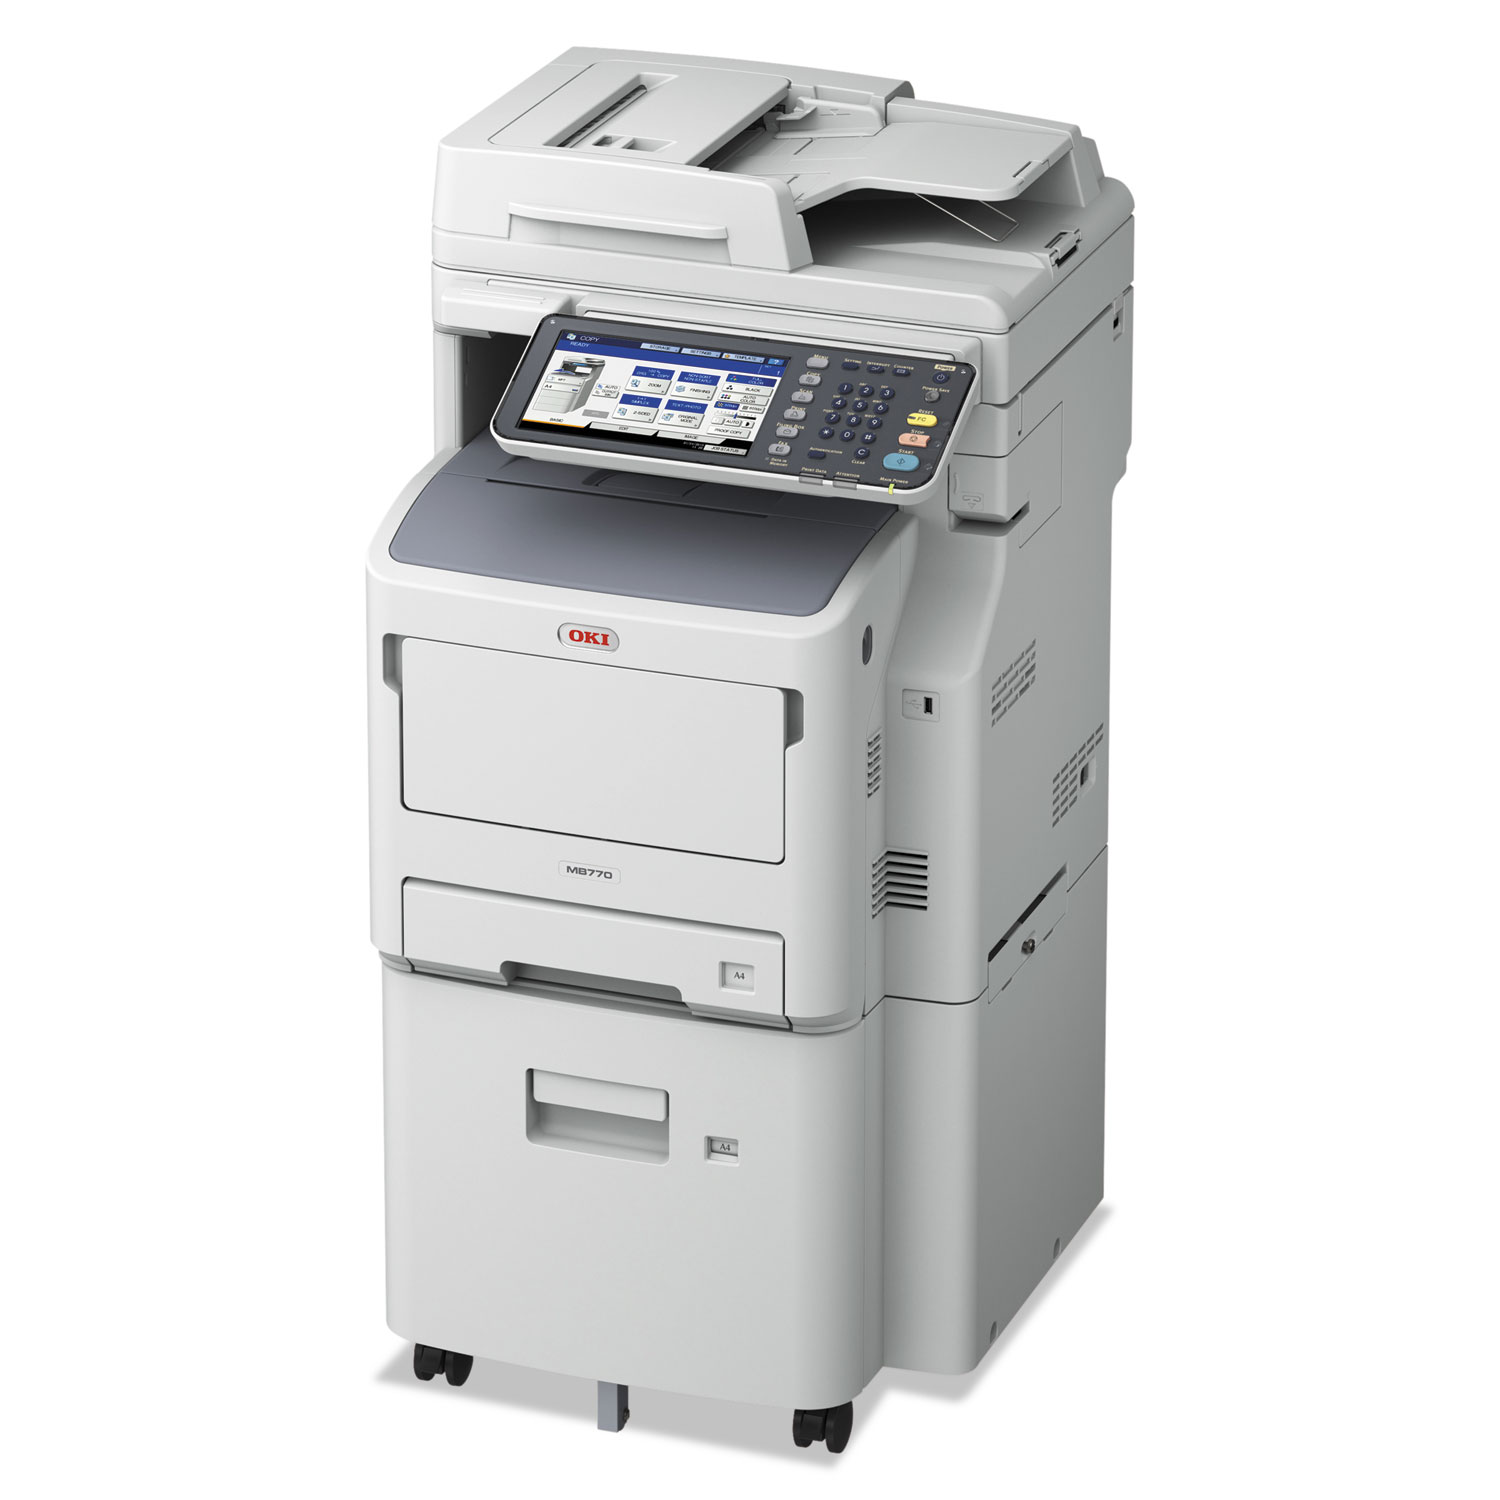 MB770fx+ Monochrome Multifunction Laser Printer, Copy/Fax/Print/Scan